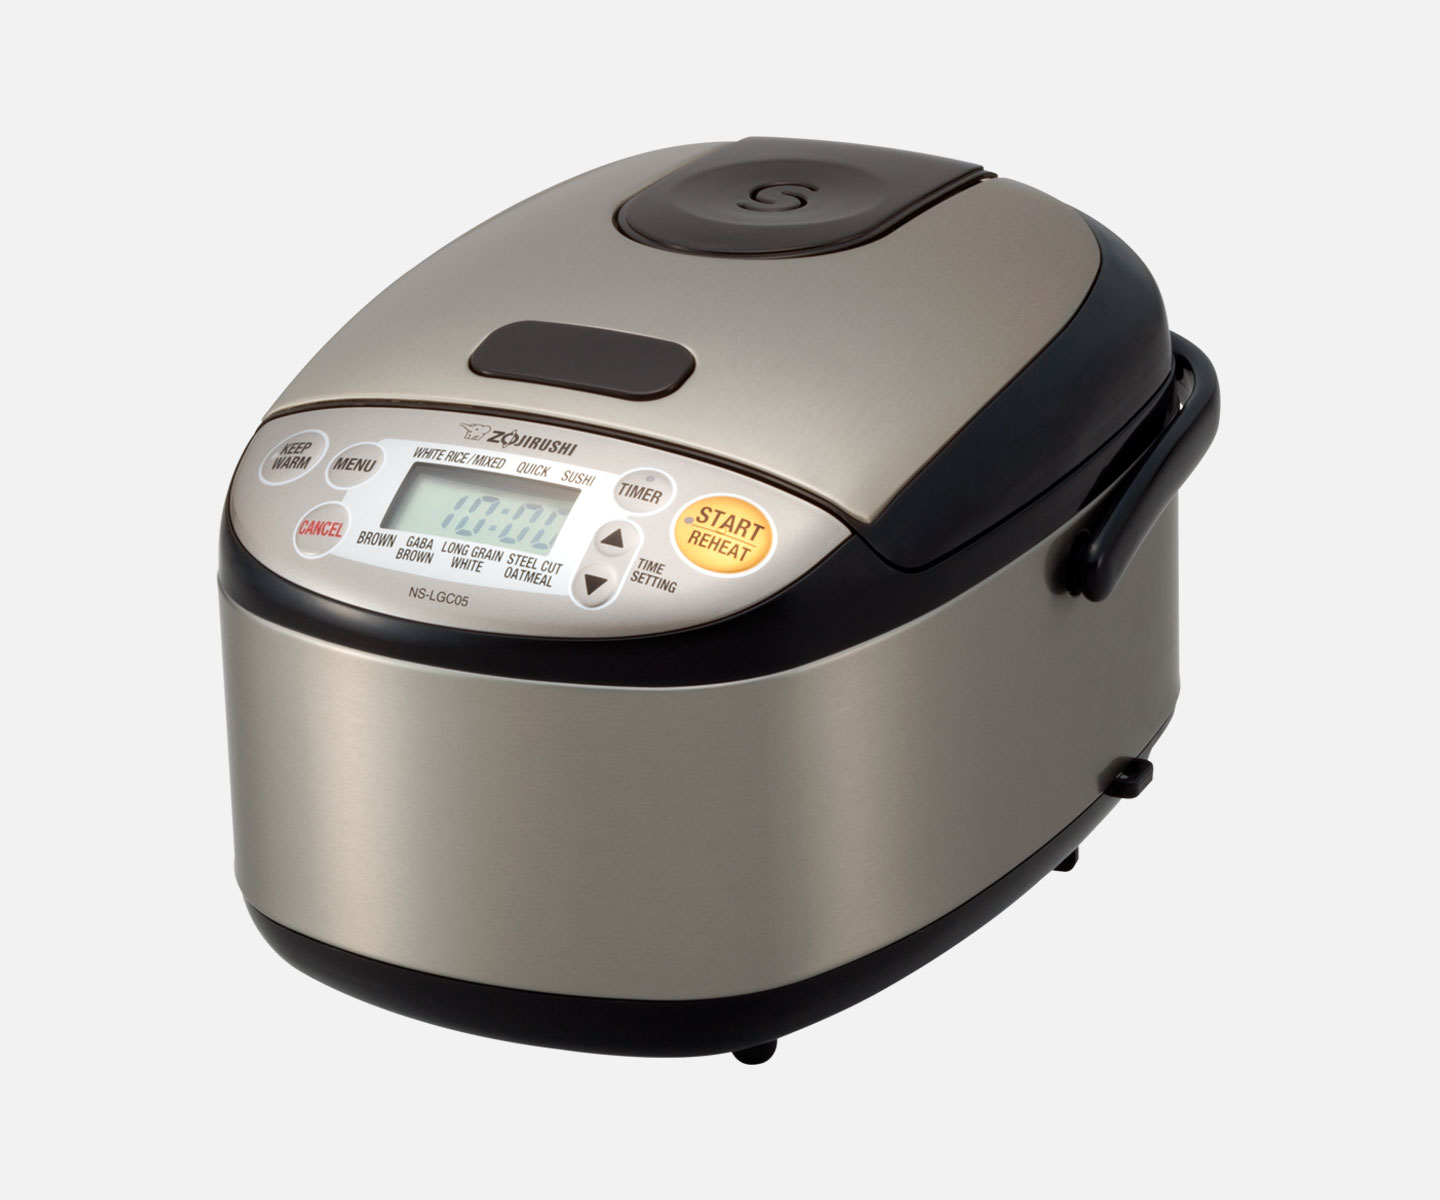 Micom Rice Cooker & Warmer NS-LGC05 | Zojirushi.com